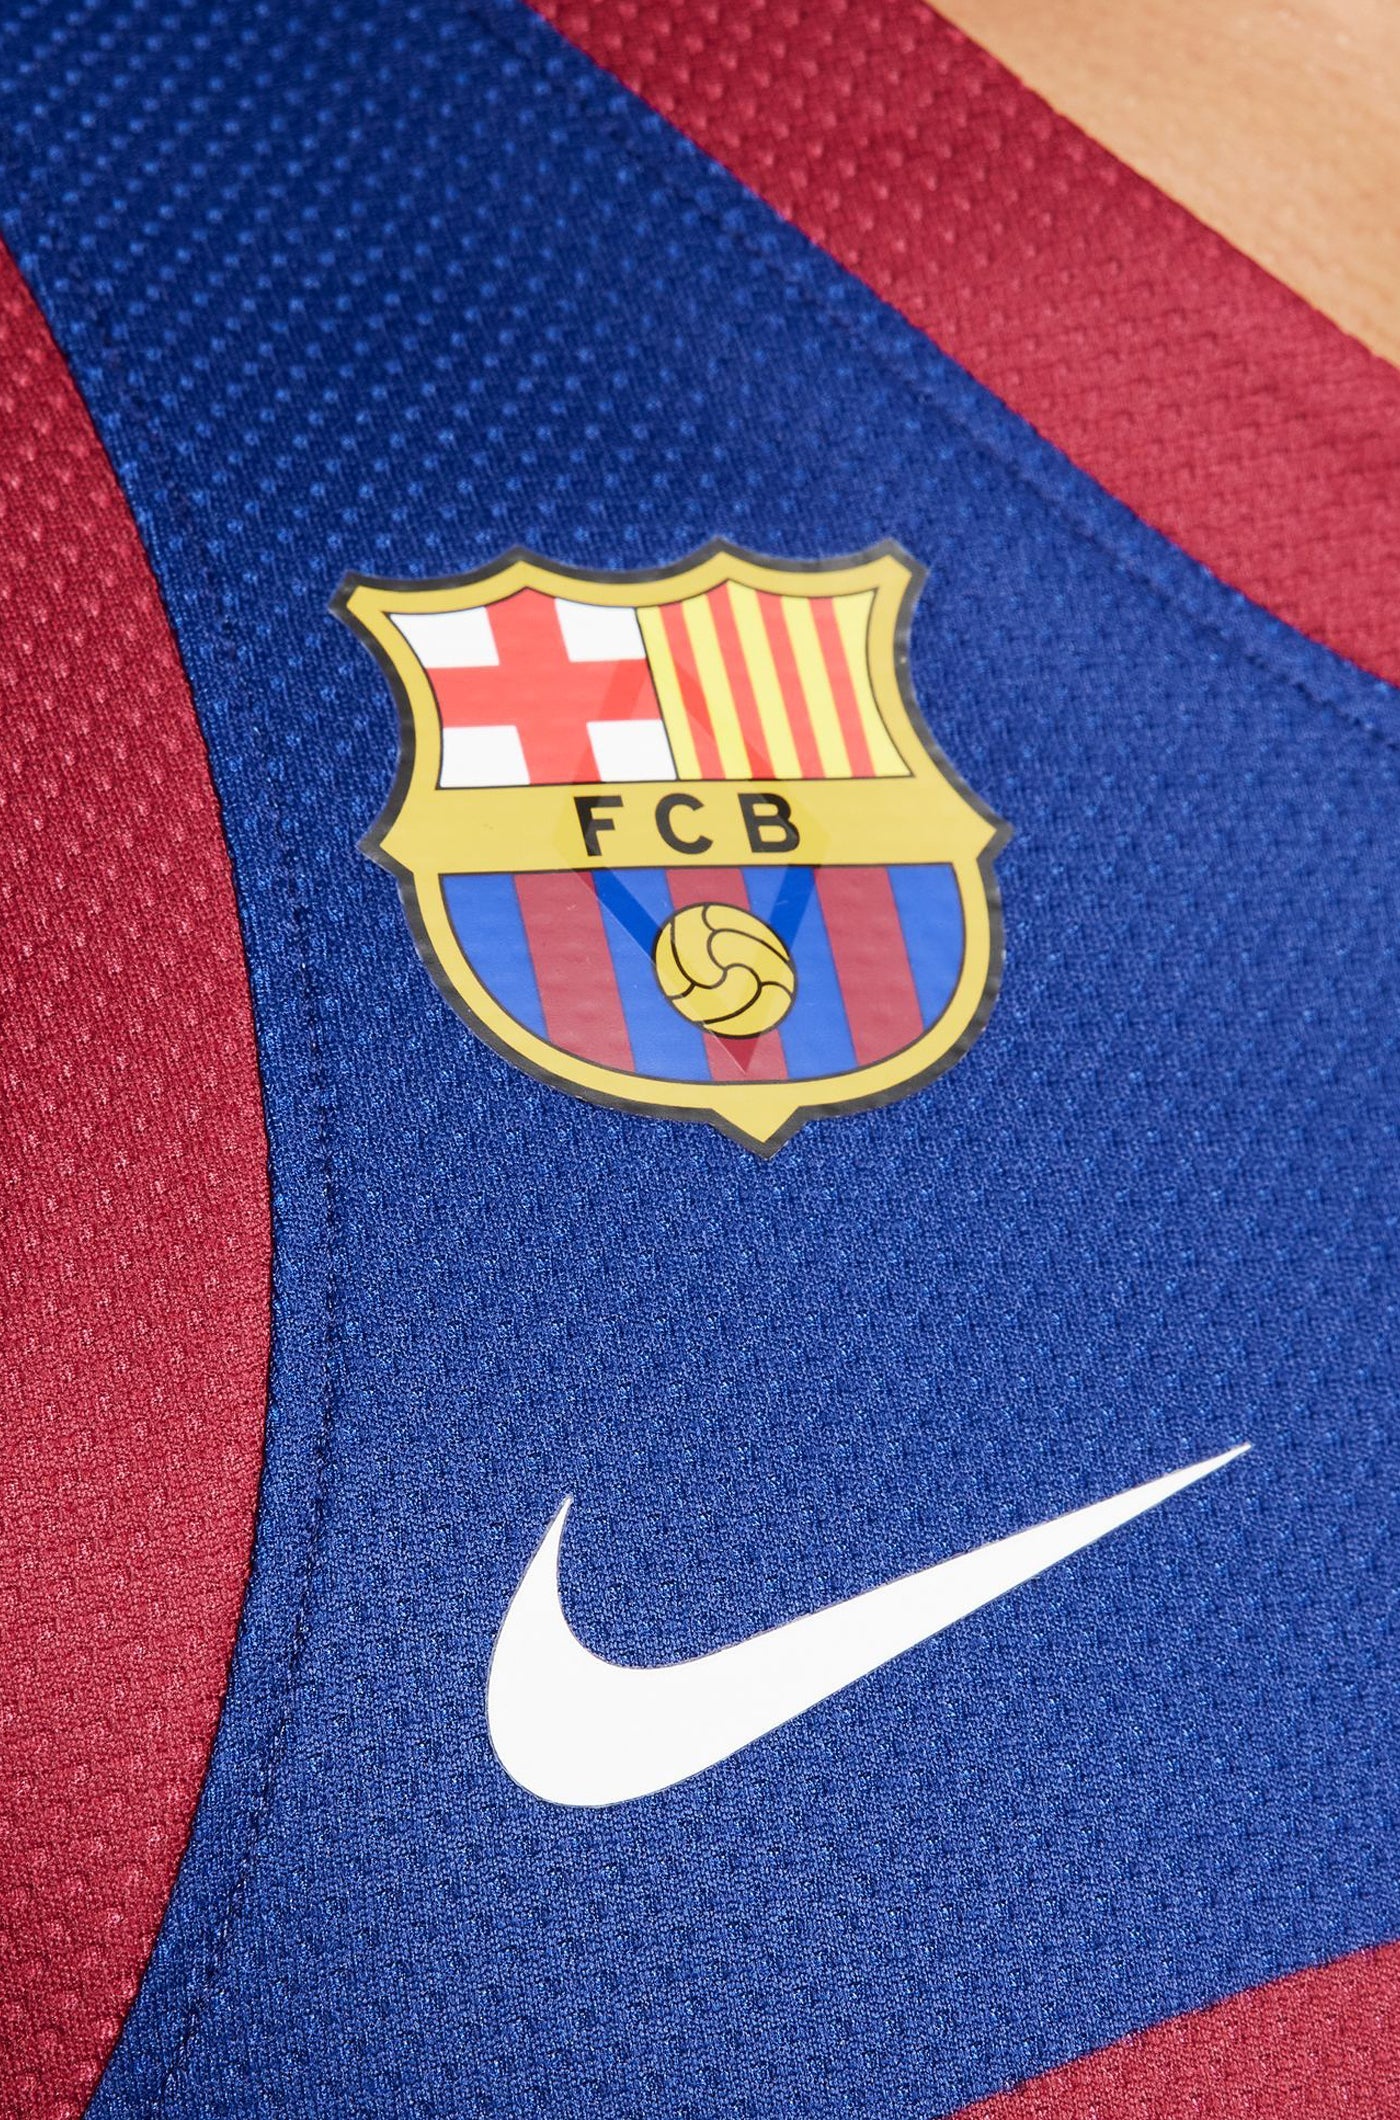 Euroleague FC Barcelona home basketball shirt 23/24 - RICKY